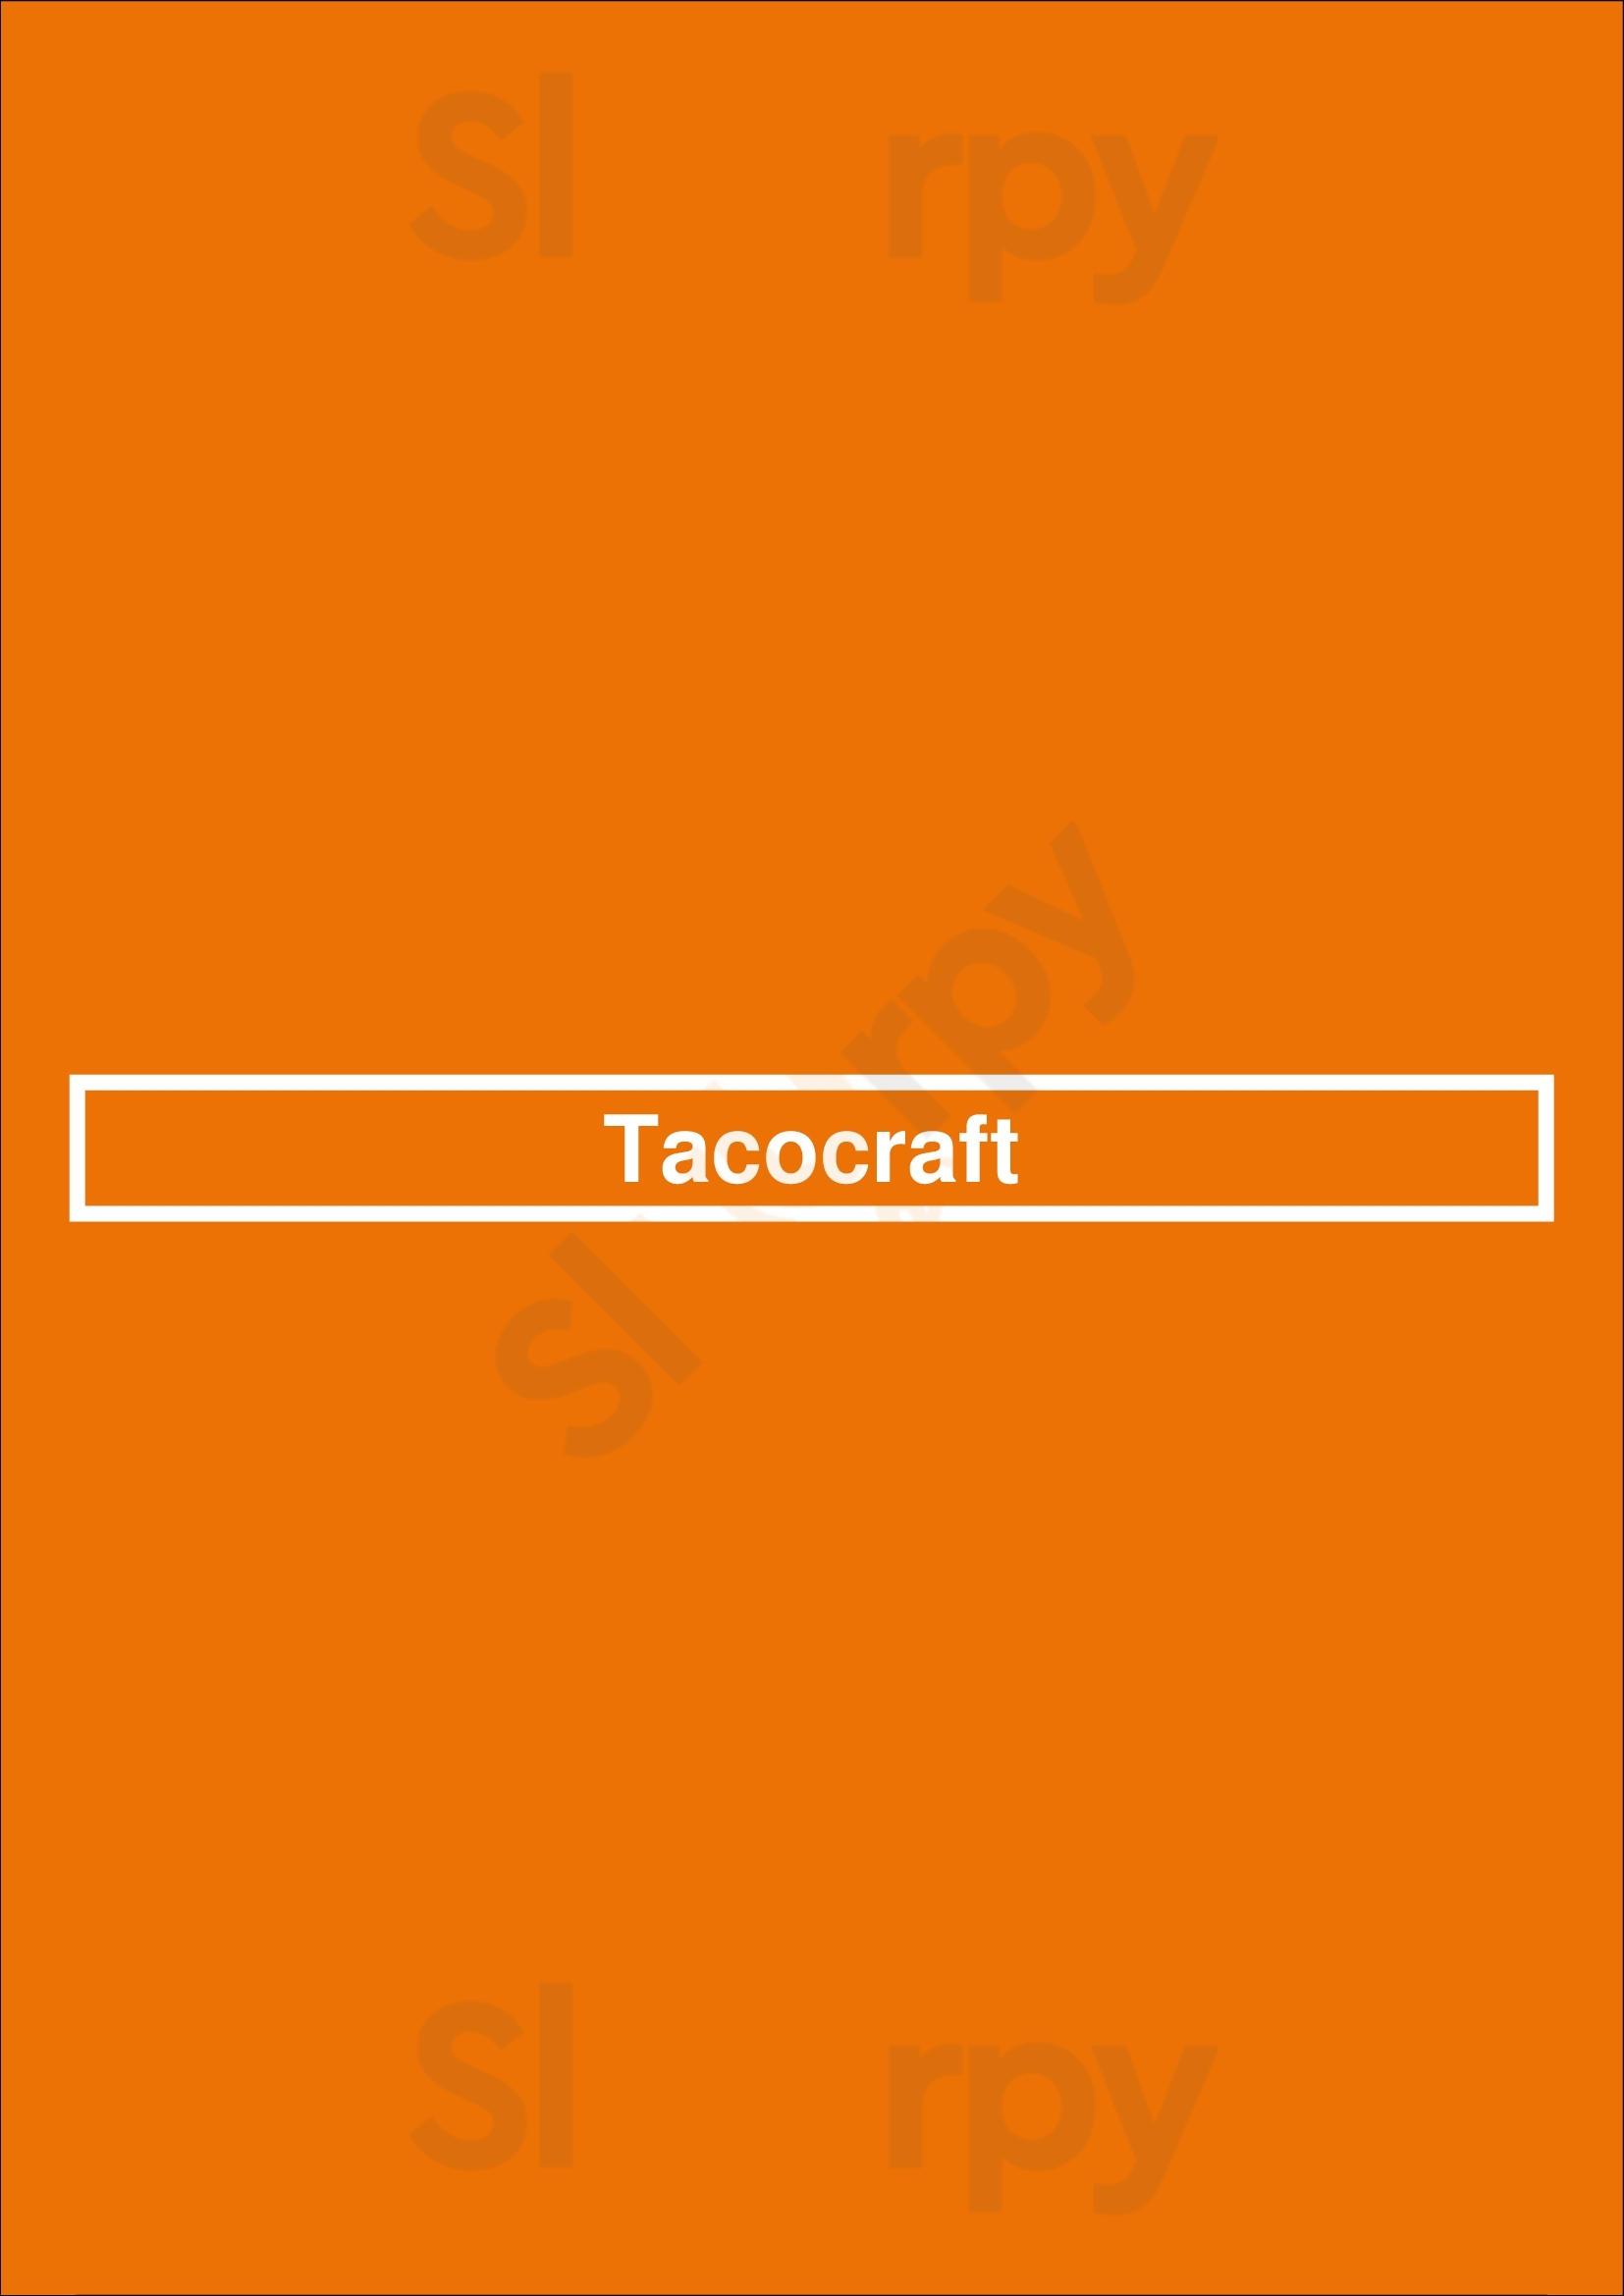 Tacocraft Fort Lauderdale Menu - 1